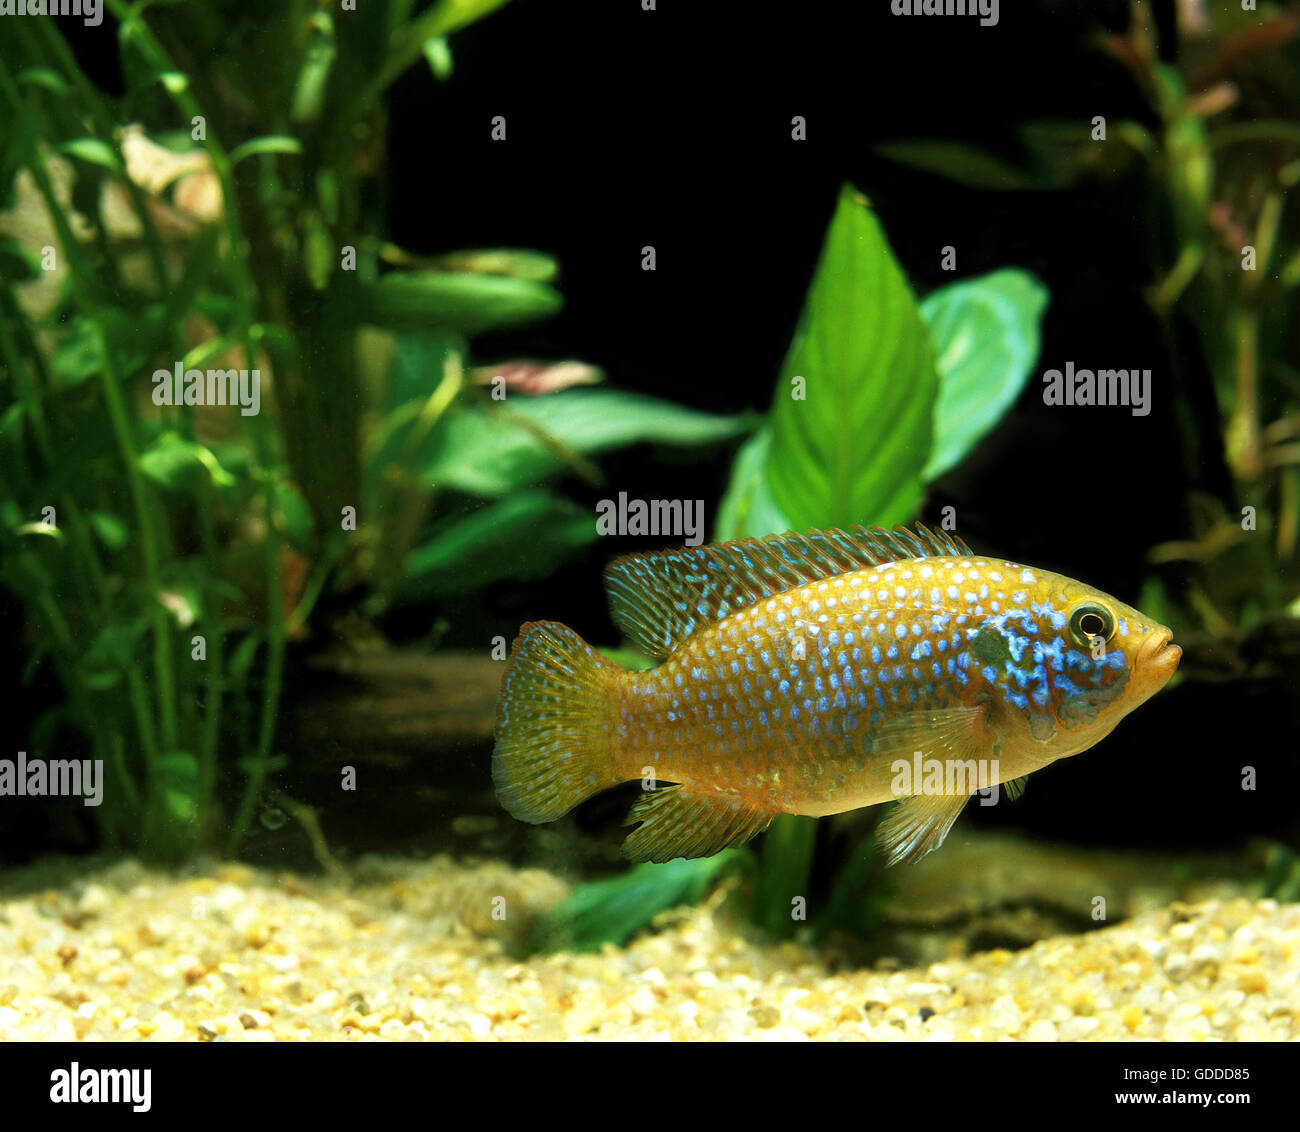 African Fish, hemichromis lifalili, Cichlid, Adult Stock Photo